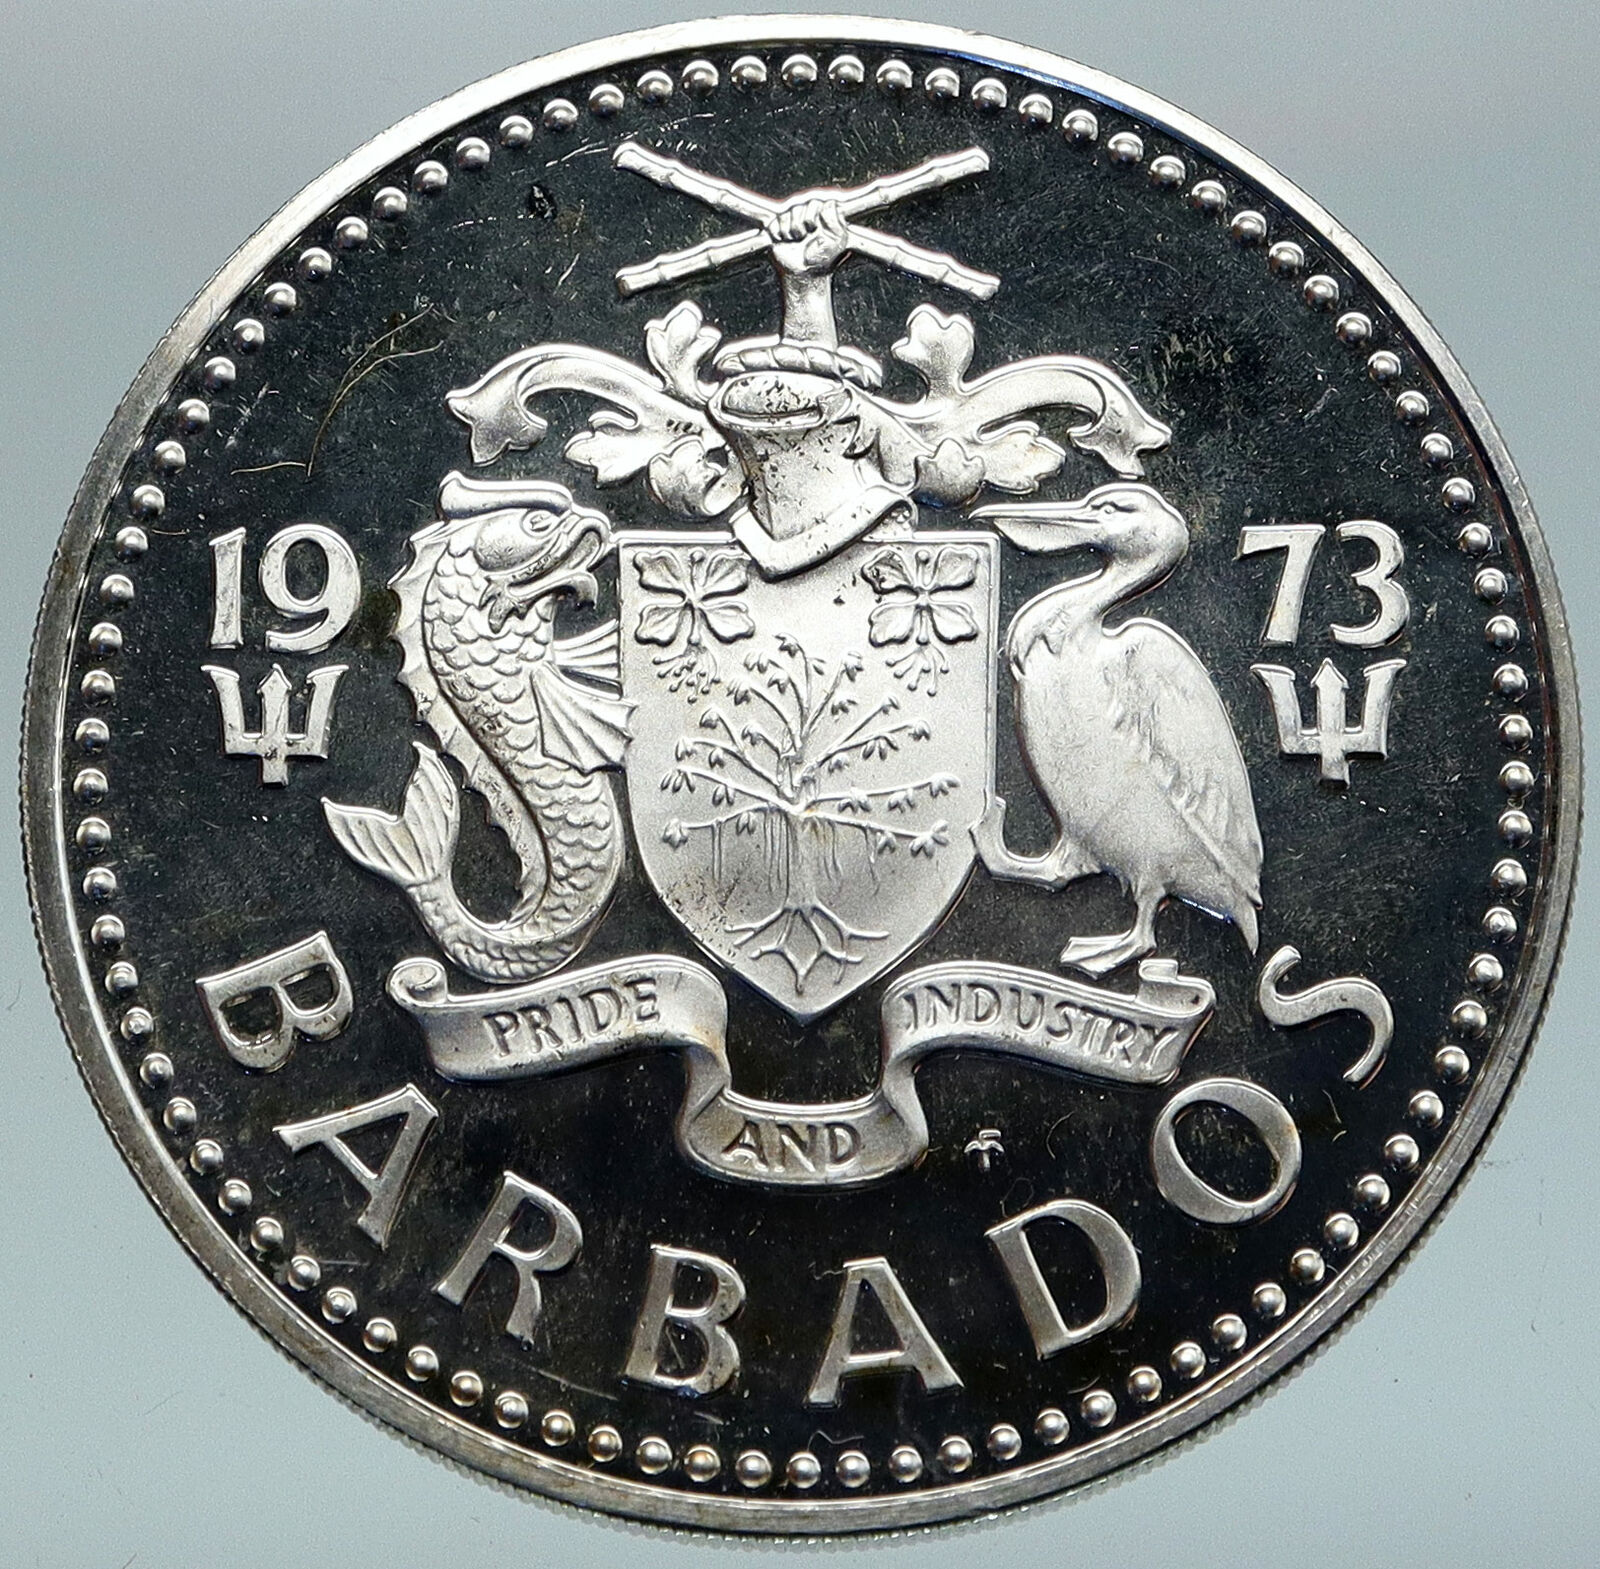 1973 BARBADOS Trafalgar Fountain Arms VINTAGE PROOF Silver 5 Dollars Coin i86894